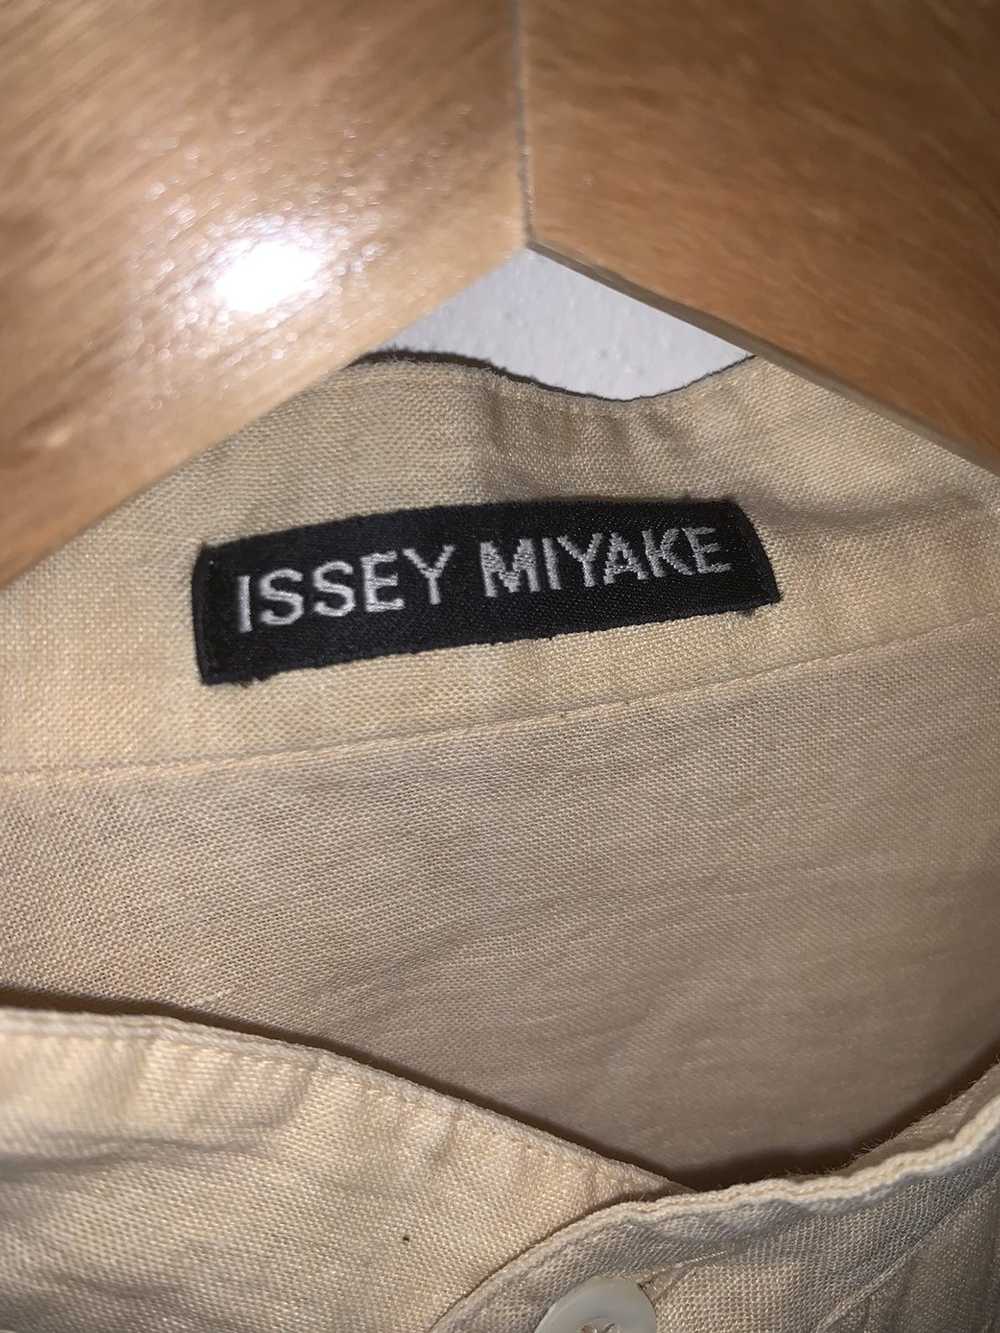 Issey Miyake Issey Miyake long sleeve shirt - image 2